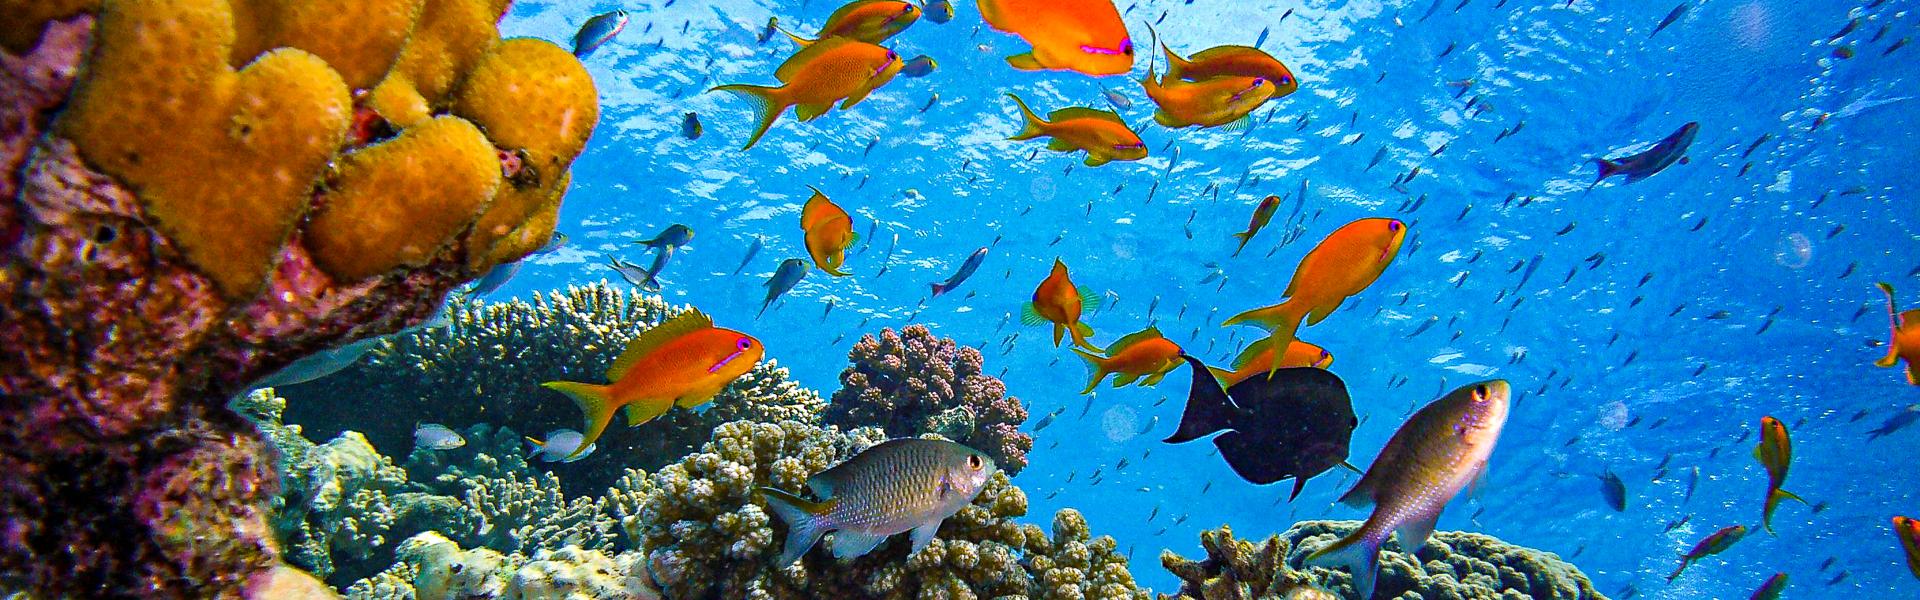 Unterwasserwelt im Roten Meer |  joakant, Pixabay / Chamleon